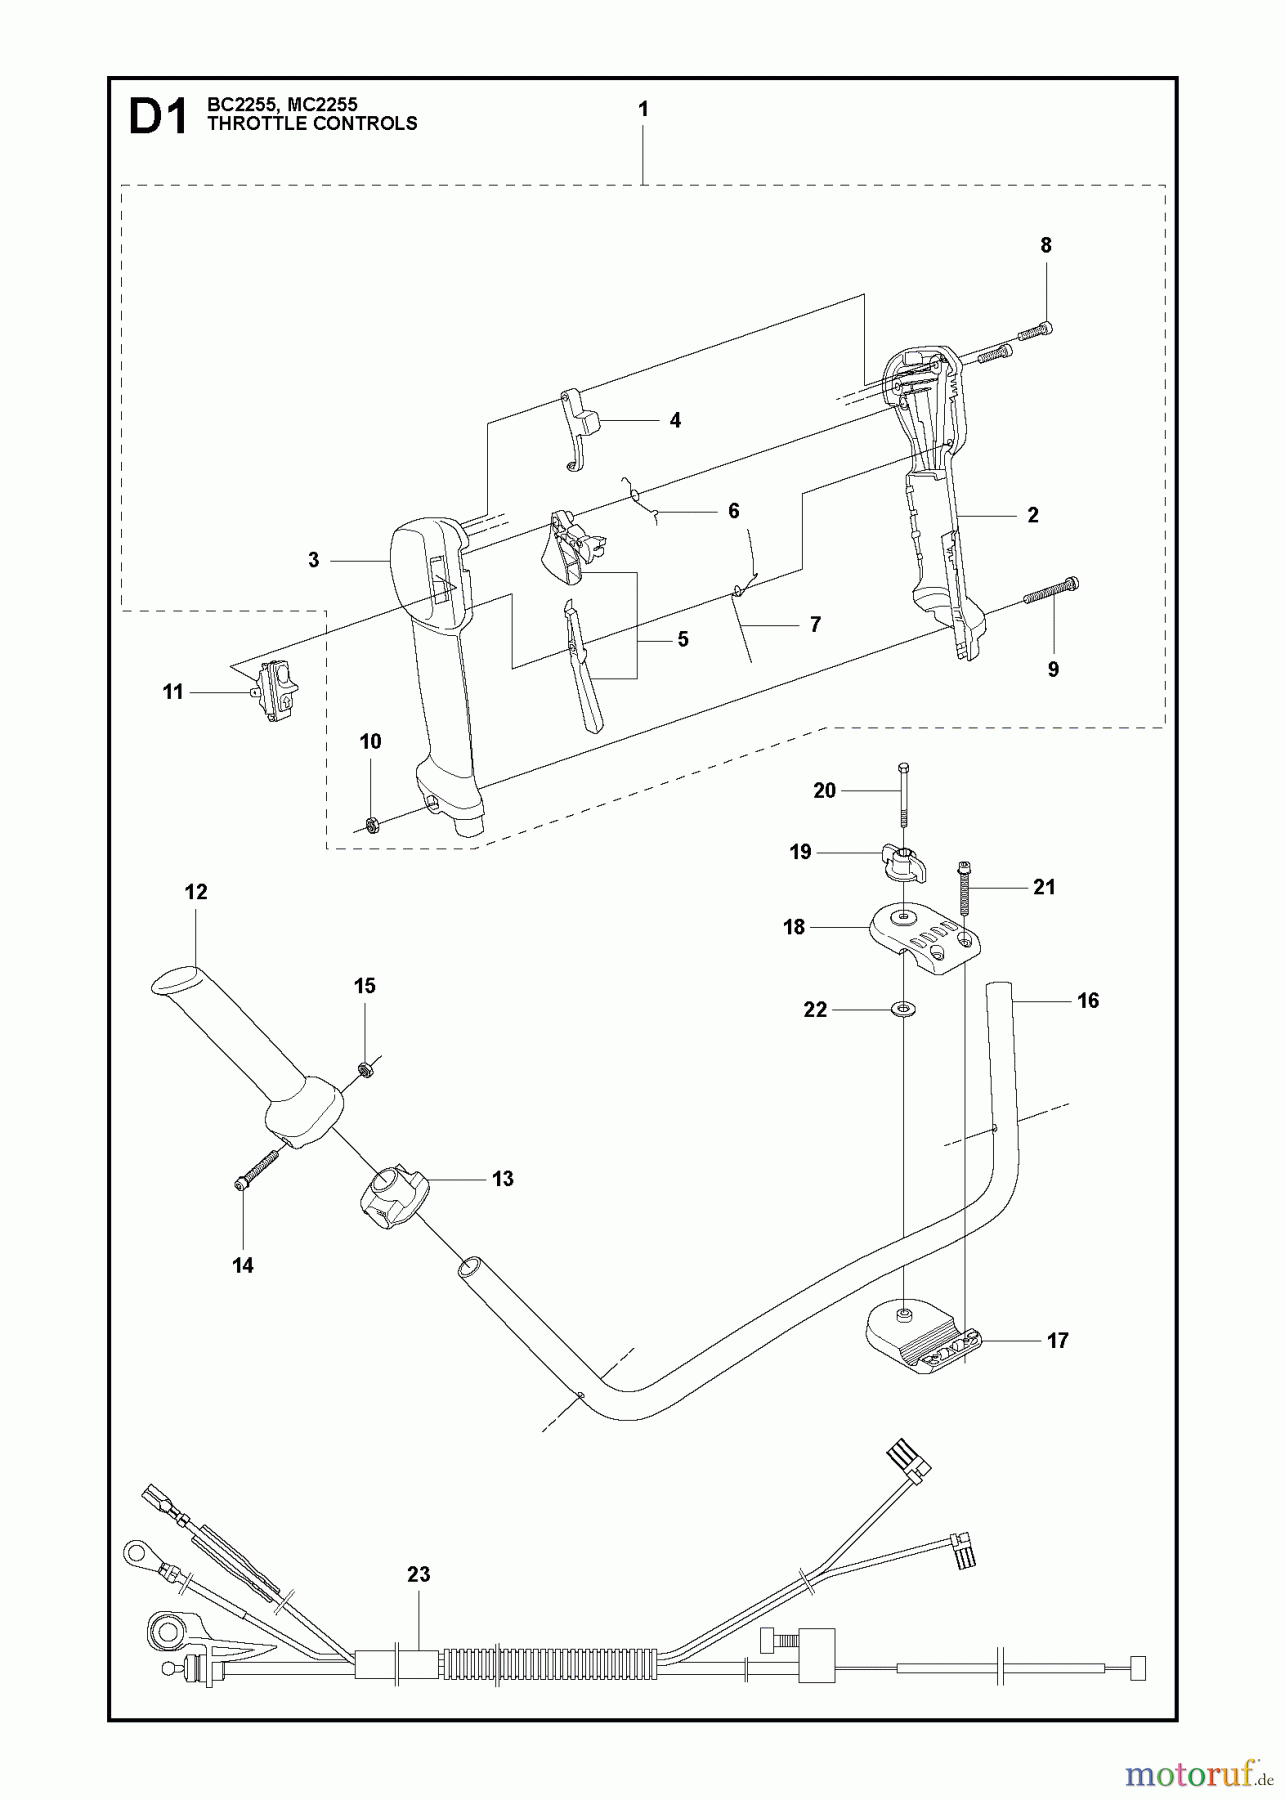  Jonsered Motorsensen, Trimmer BC2255 - Jonsered Brushcutter (2011-01) THROTTLE CONTROLS